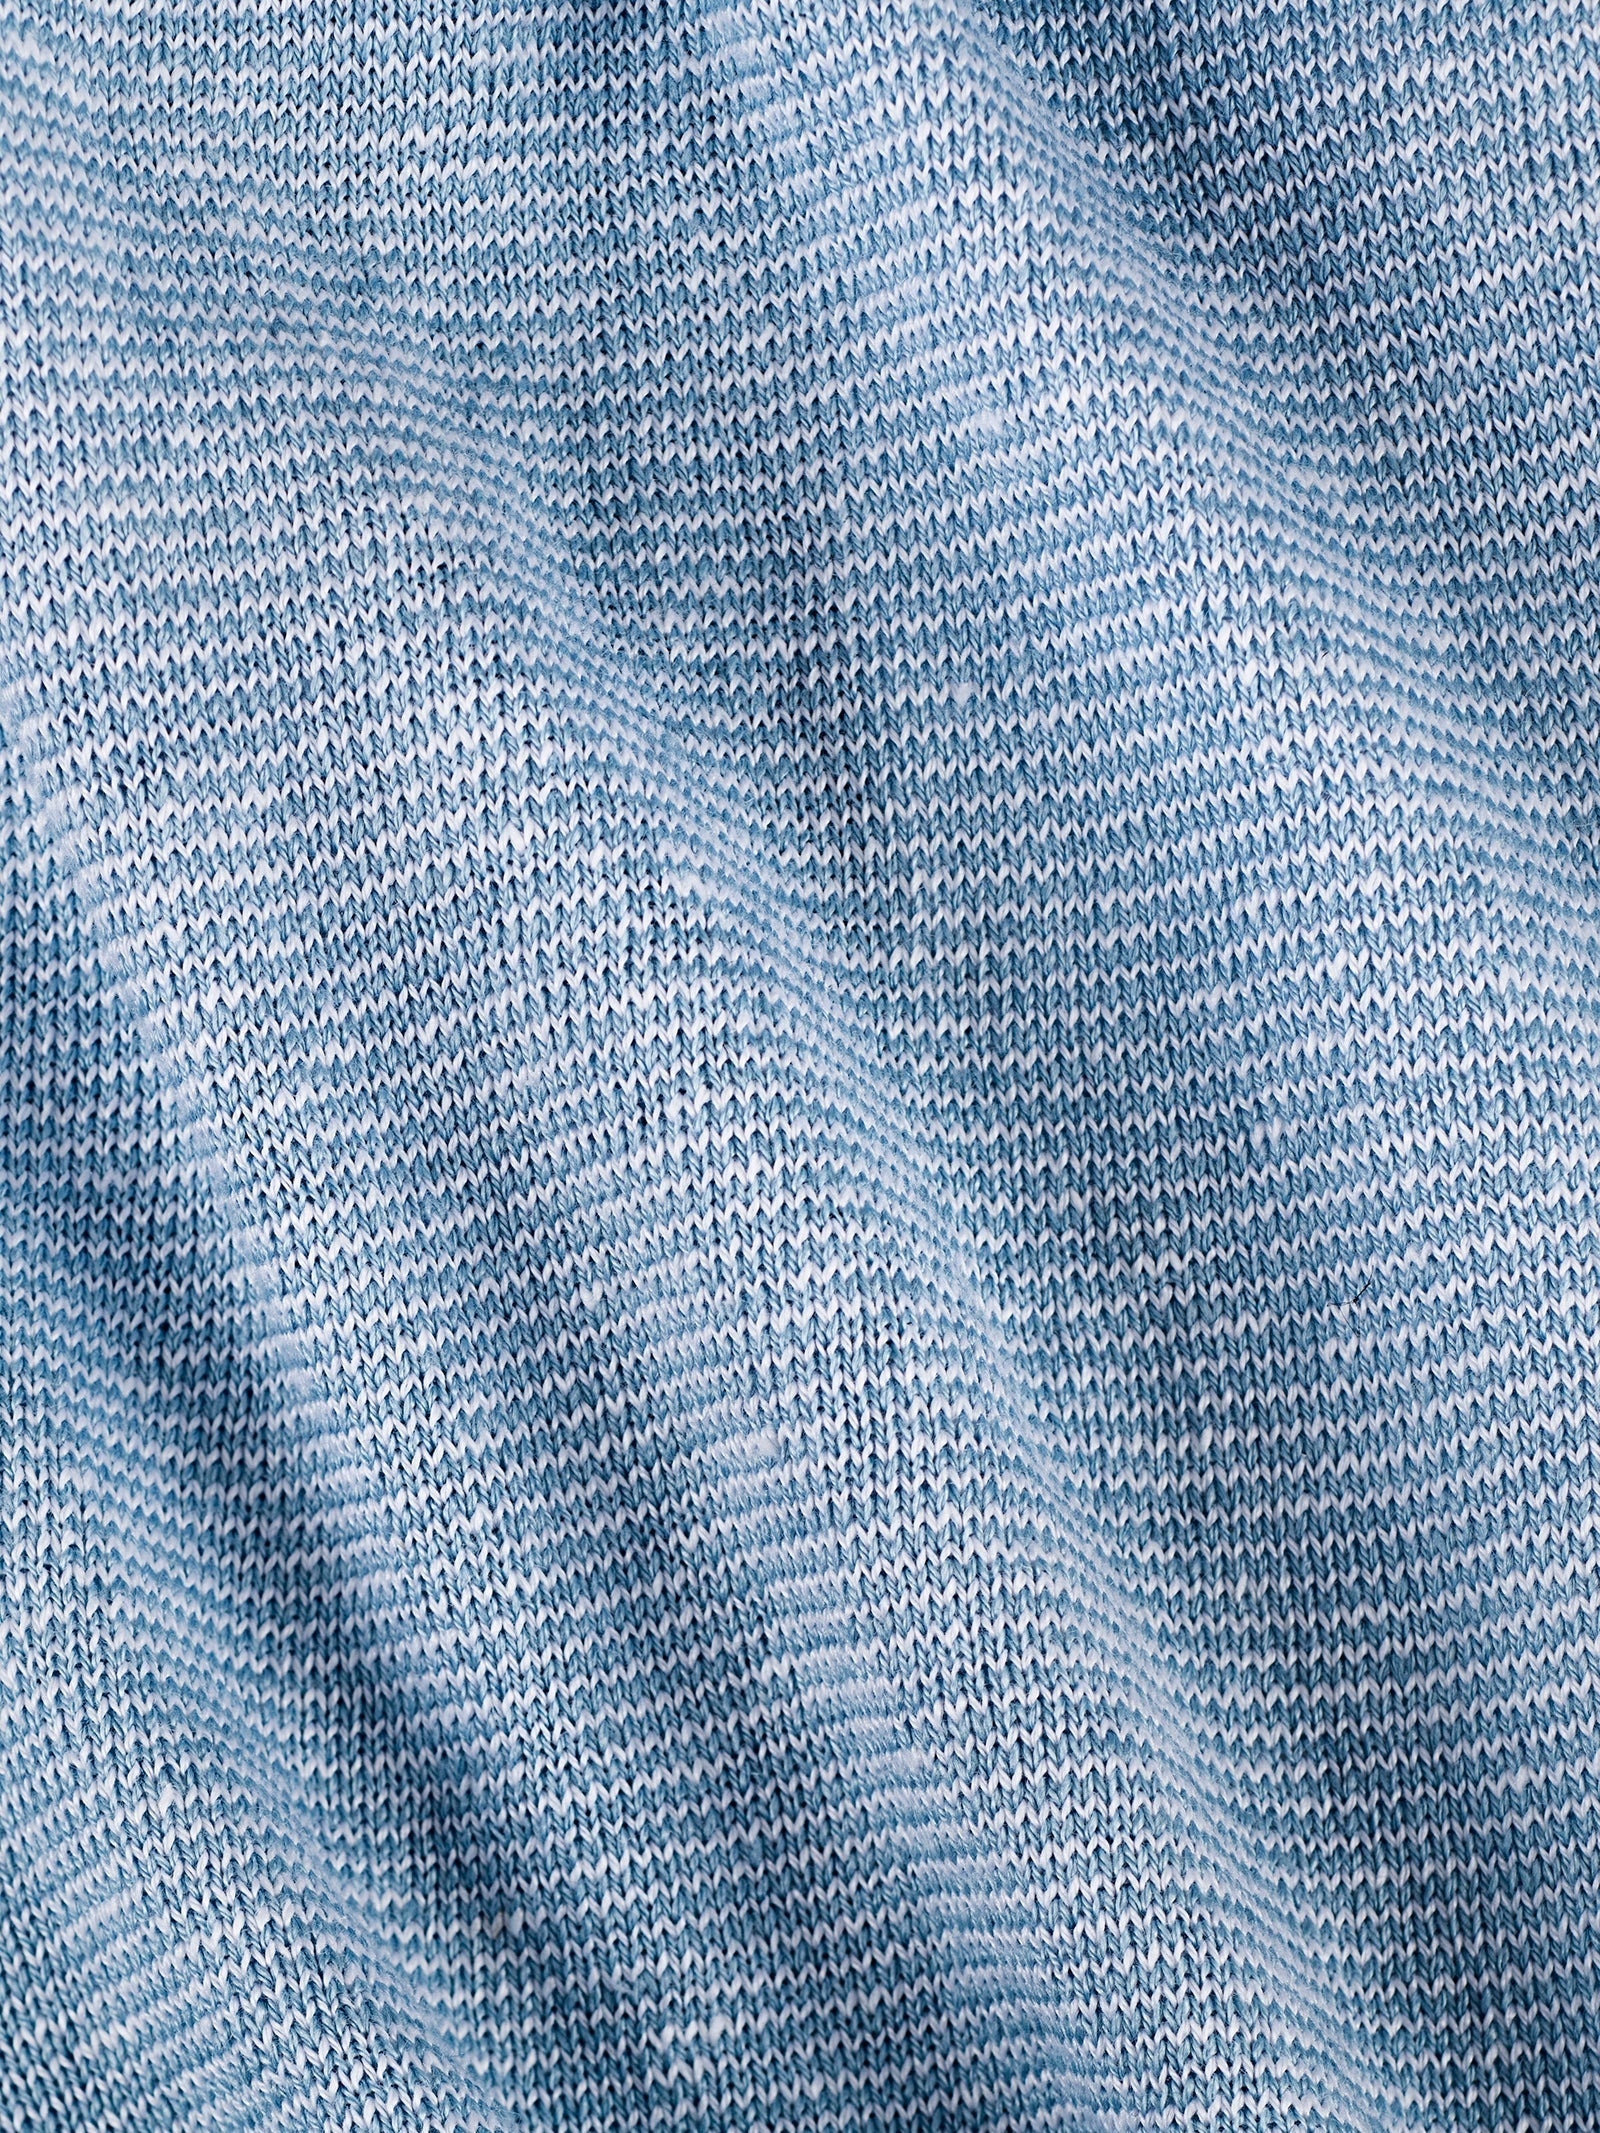 Short Brio 100% Capri blue and white linen short  detail